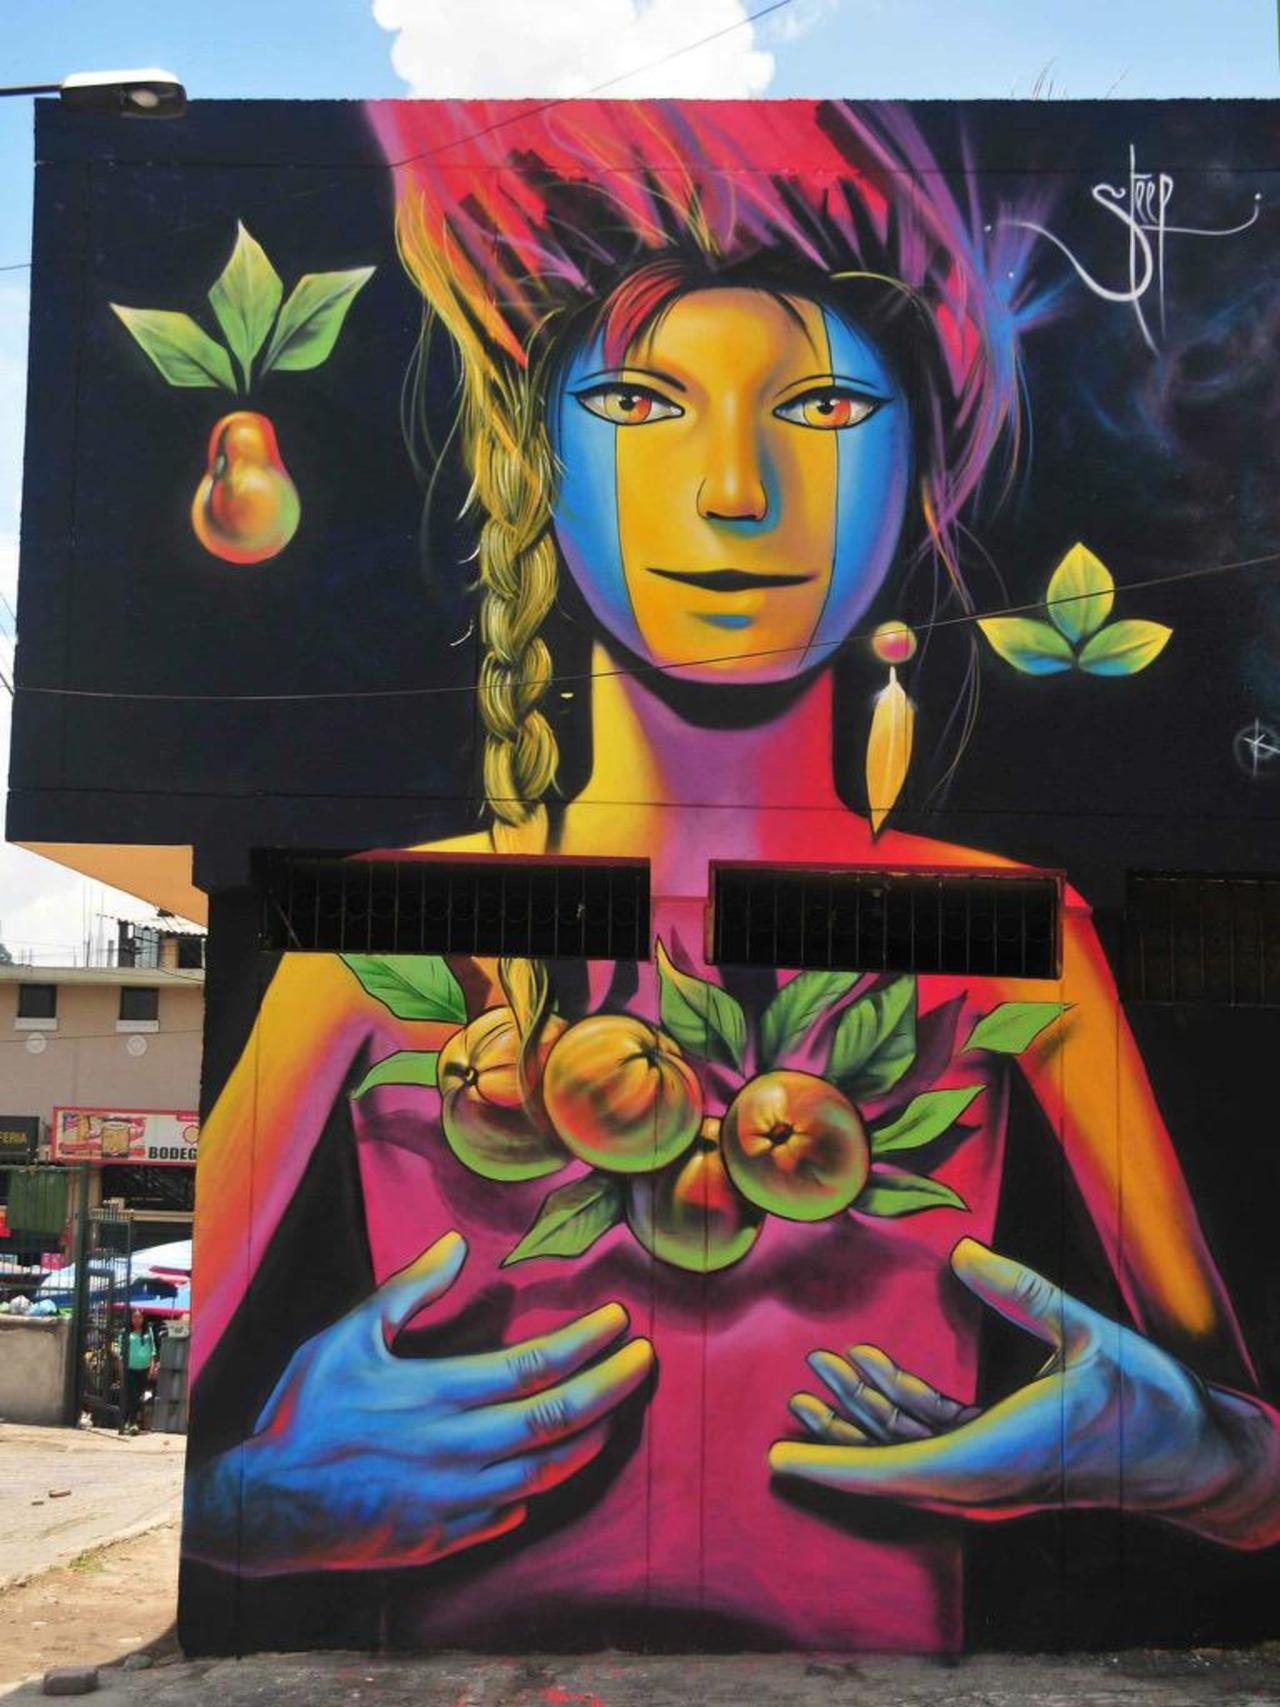 Street Art by Steep #art #graffiti #mural #streetart http://t.co/dKGIfl0HiR http://twitter.com/GoogleStreetArt/status/652717552435638272/photo/1/large?utm_source=fb&utm_medium=fb&utm_campaign=charlesjackso14&utm_content=652720469402103808 … … … … http://twitter.com/GoogleStreetArt/status/652717552435638272/photo/1/large?utm_source=fb&utm_medium=fb&utm_campaign=charlesjackso14&utm_content=652732465568727040